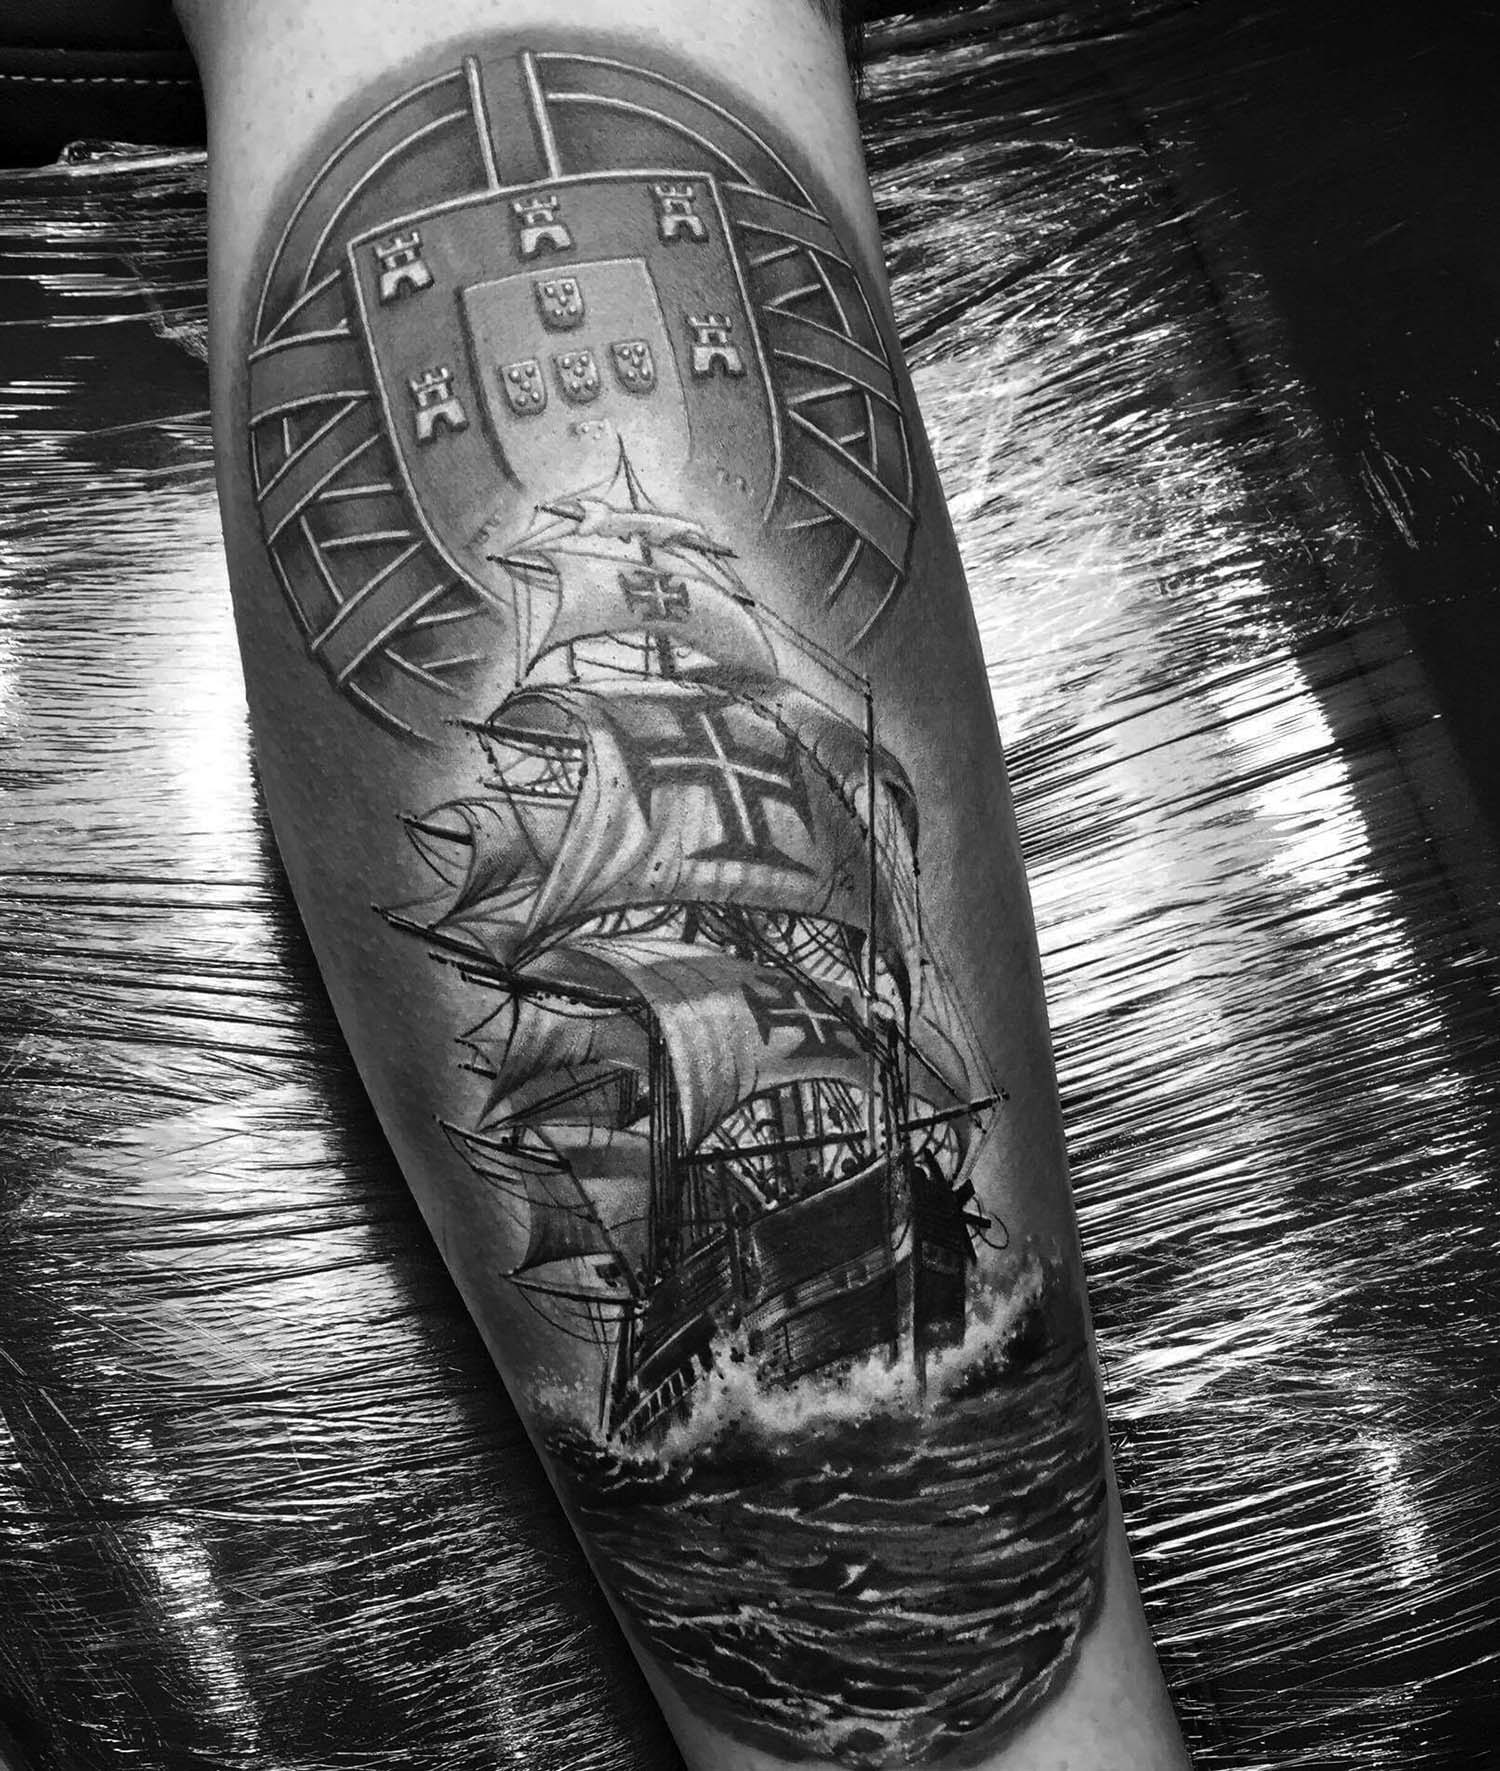 Hyperrealistic tattoo of a ship